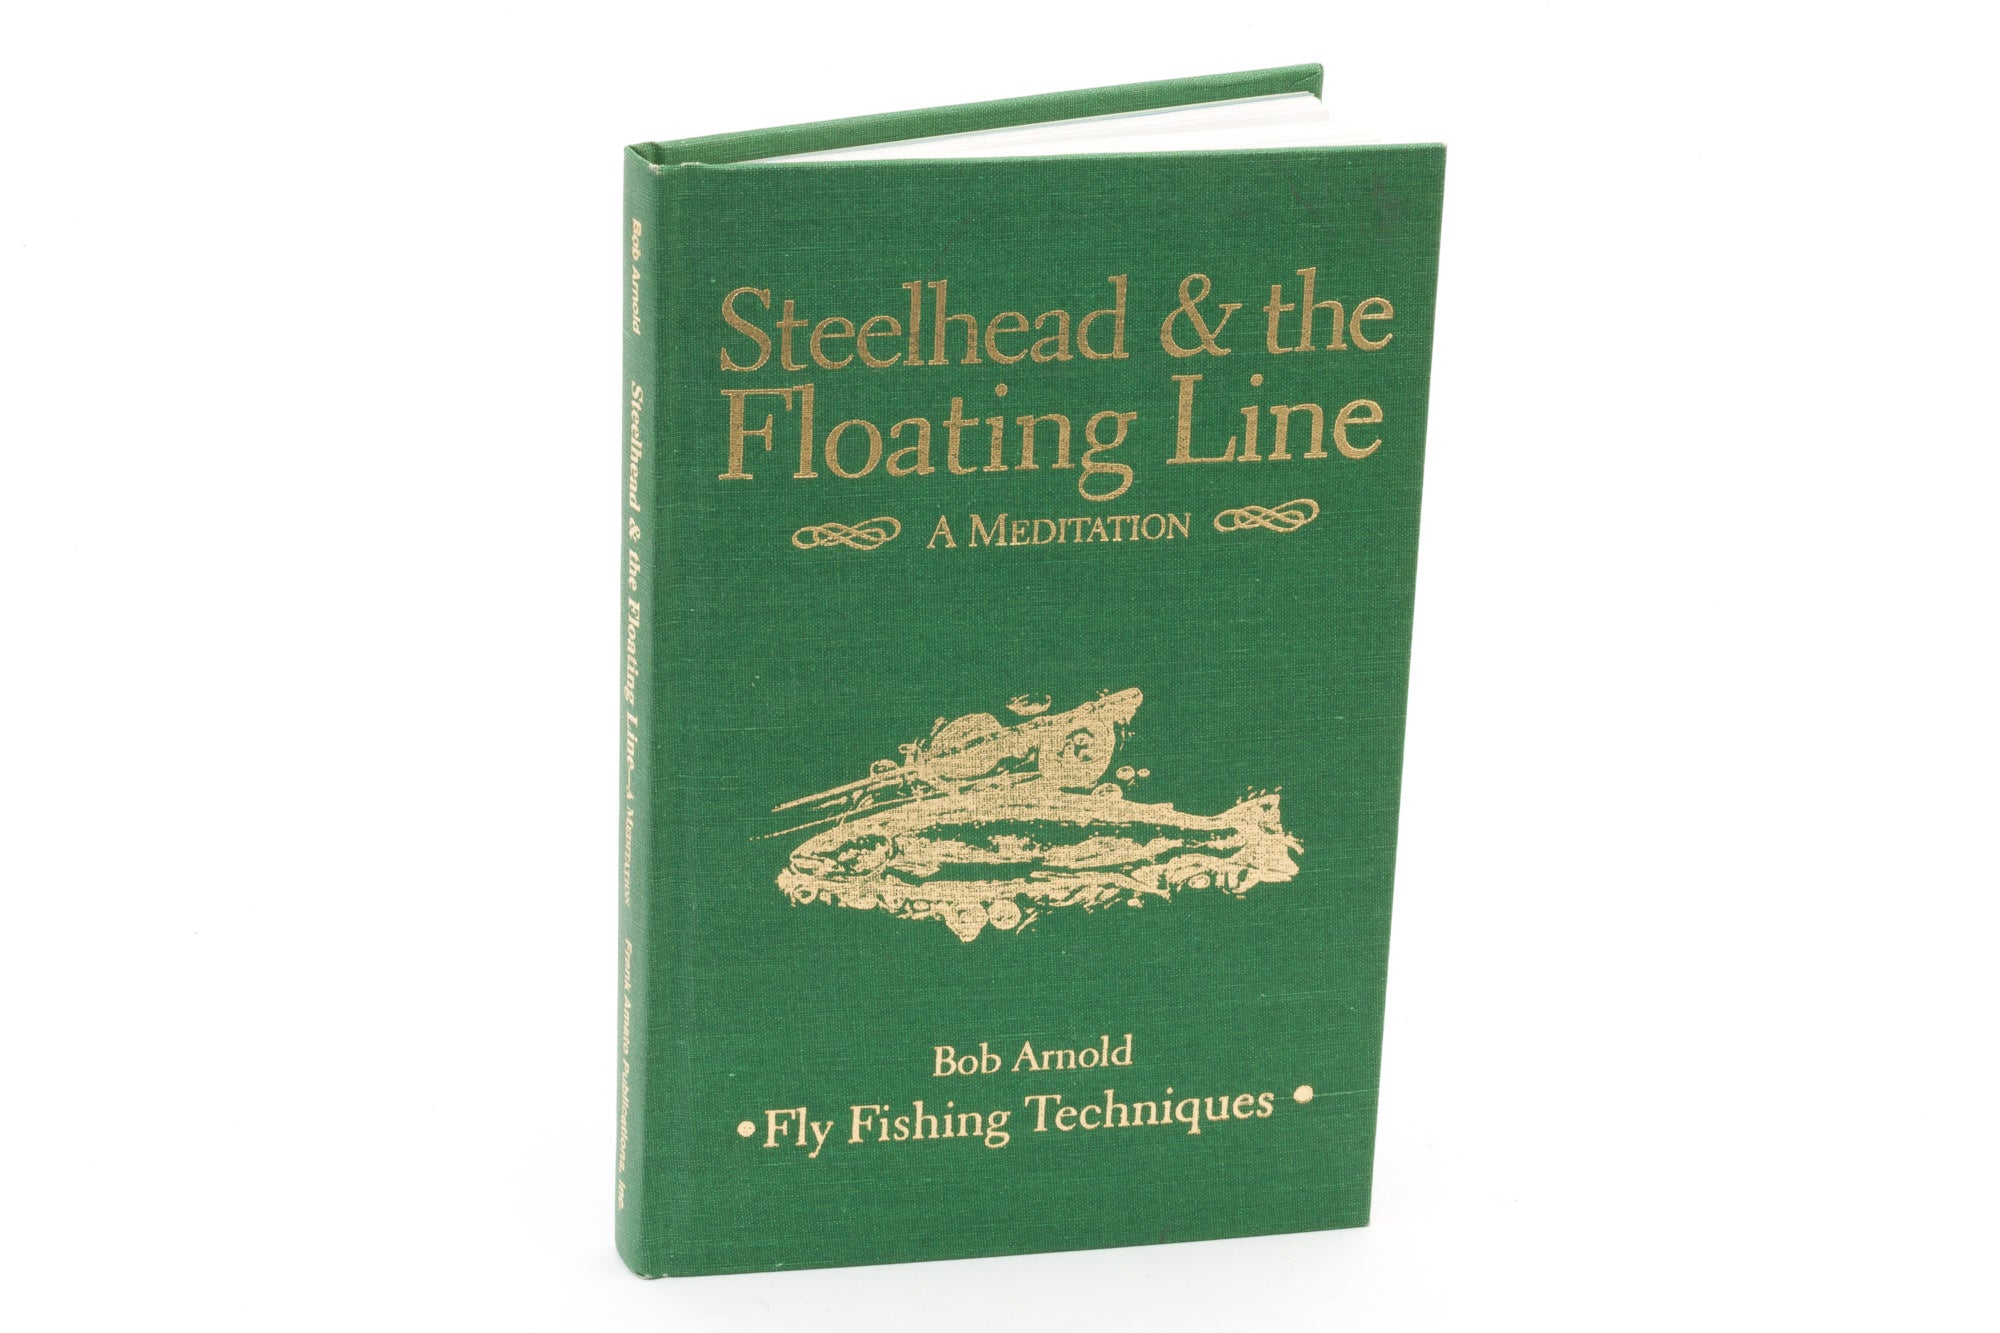 Arnold, Bob - "Steelhead & the Floating Line" - Limited Edition w/ Fly